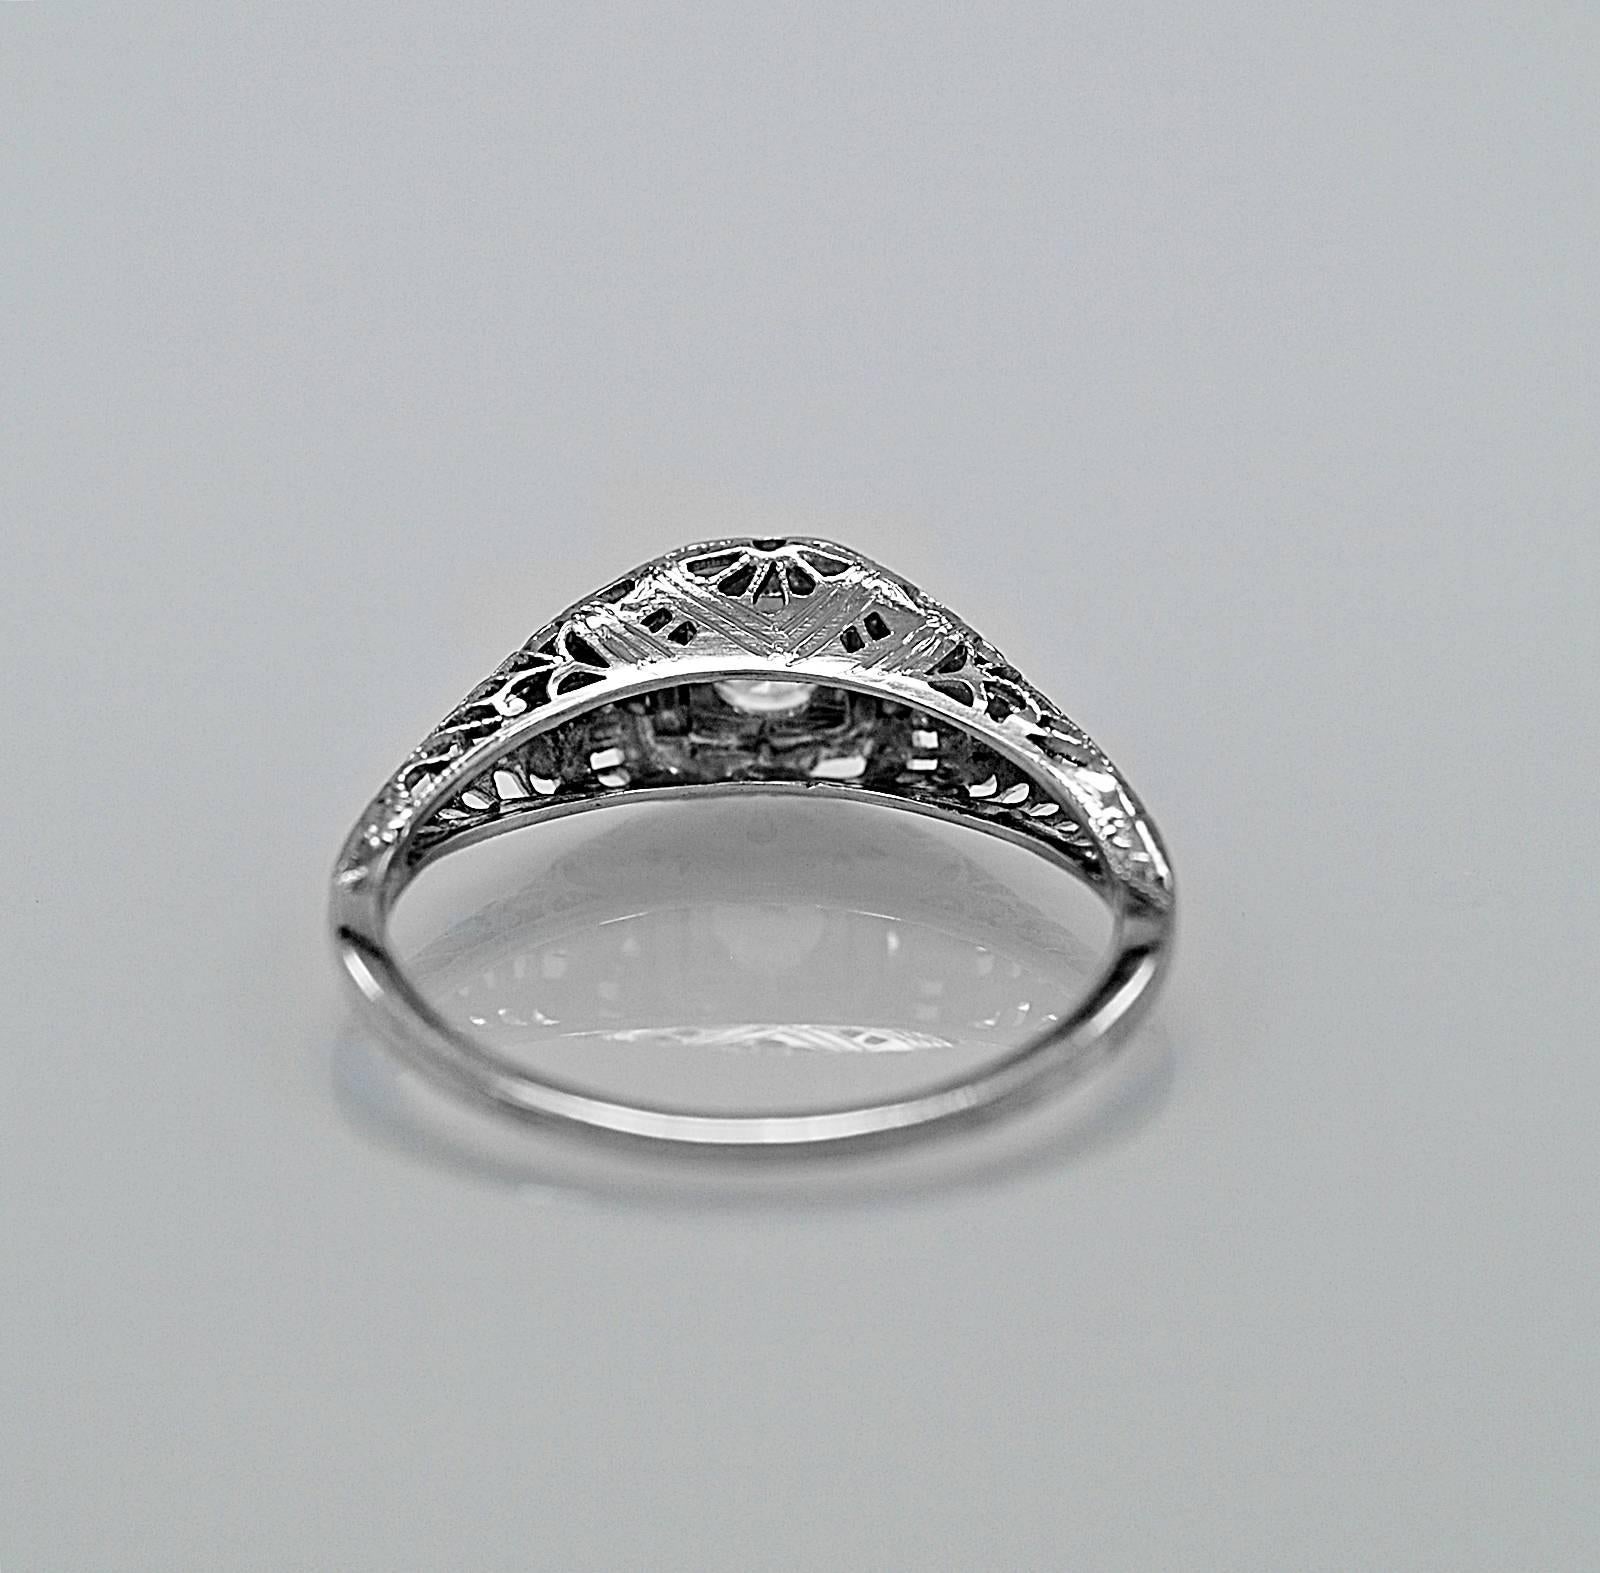 31 carat diamond ring